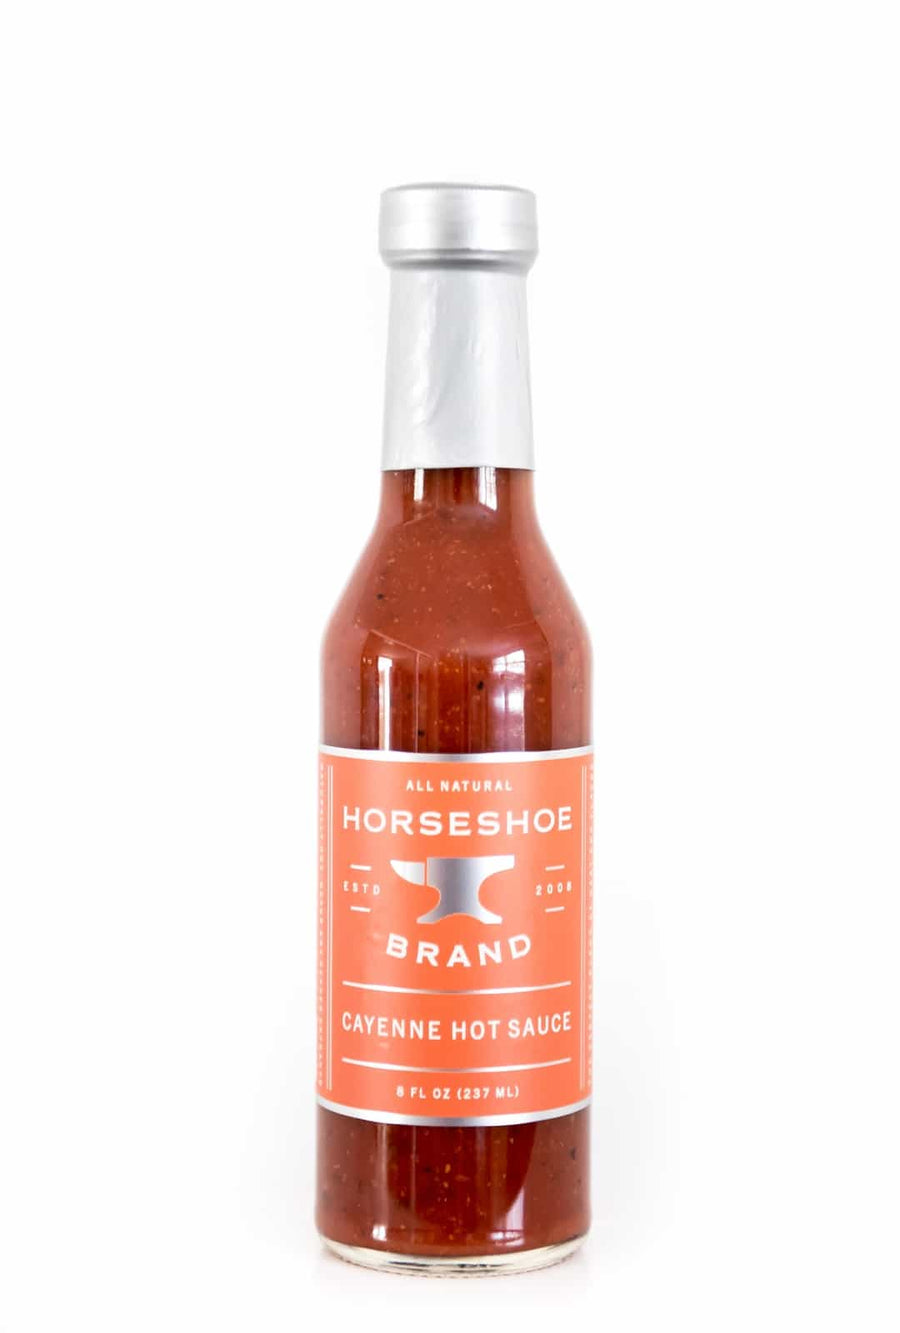 Horseshoe Brand Cayenne Hot Sauce